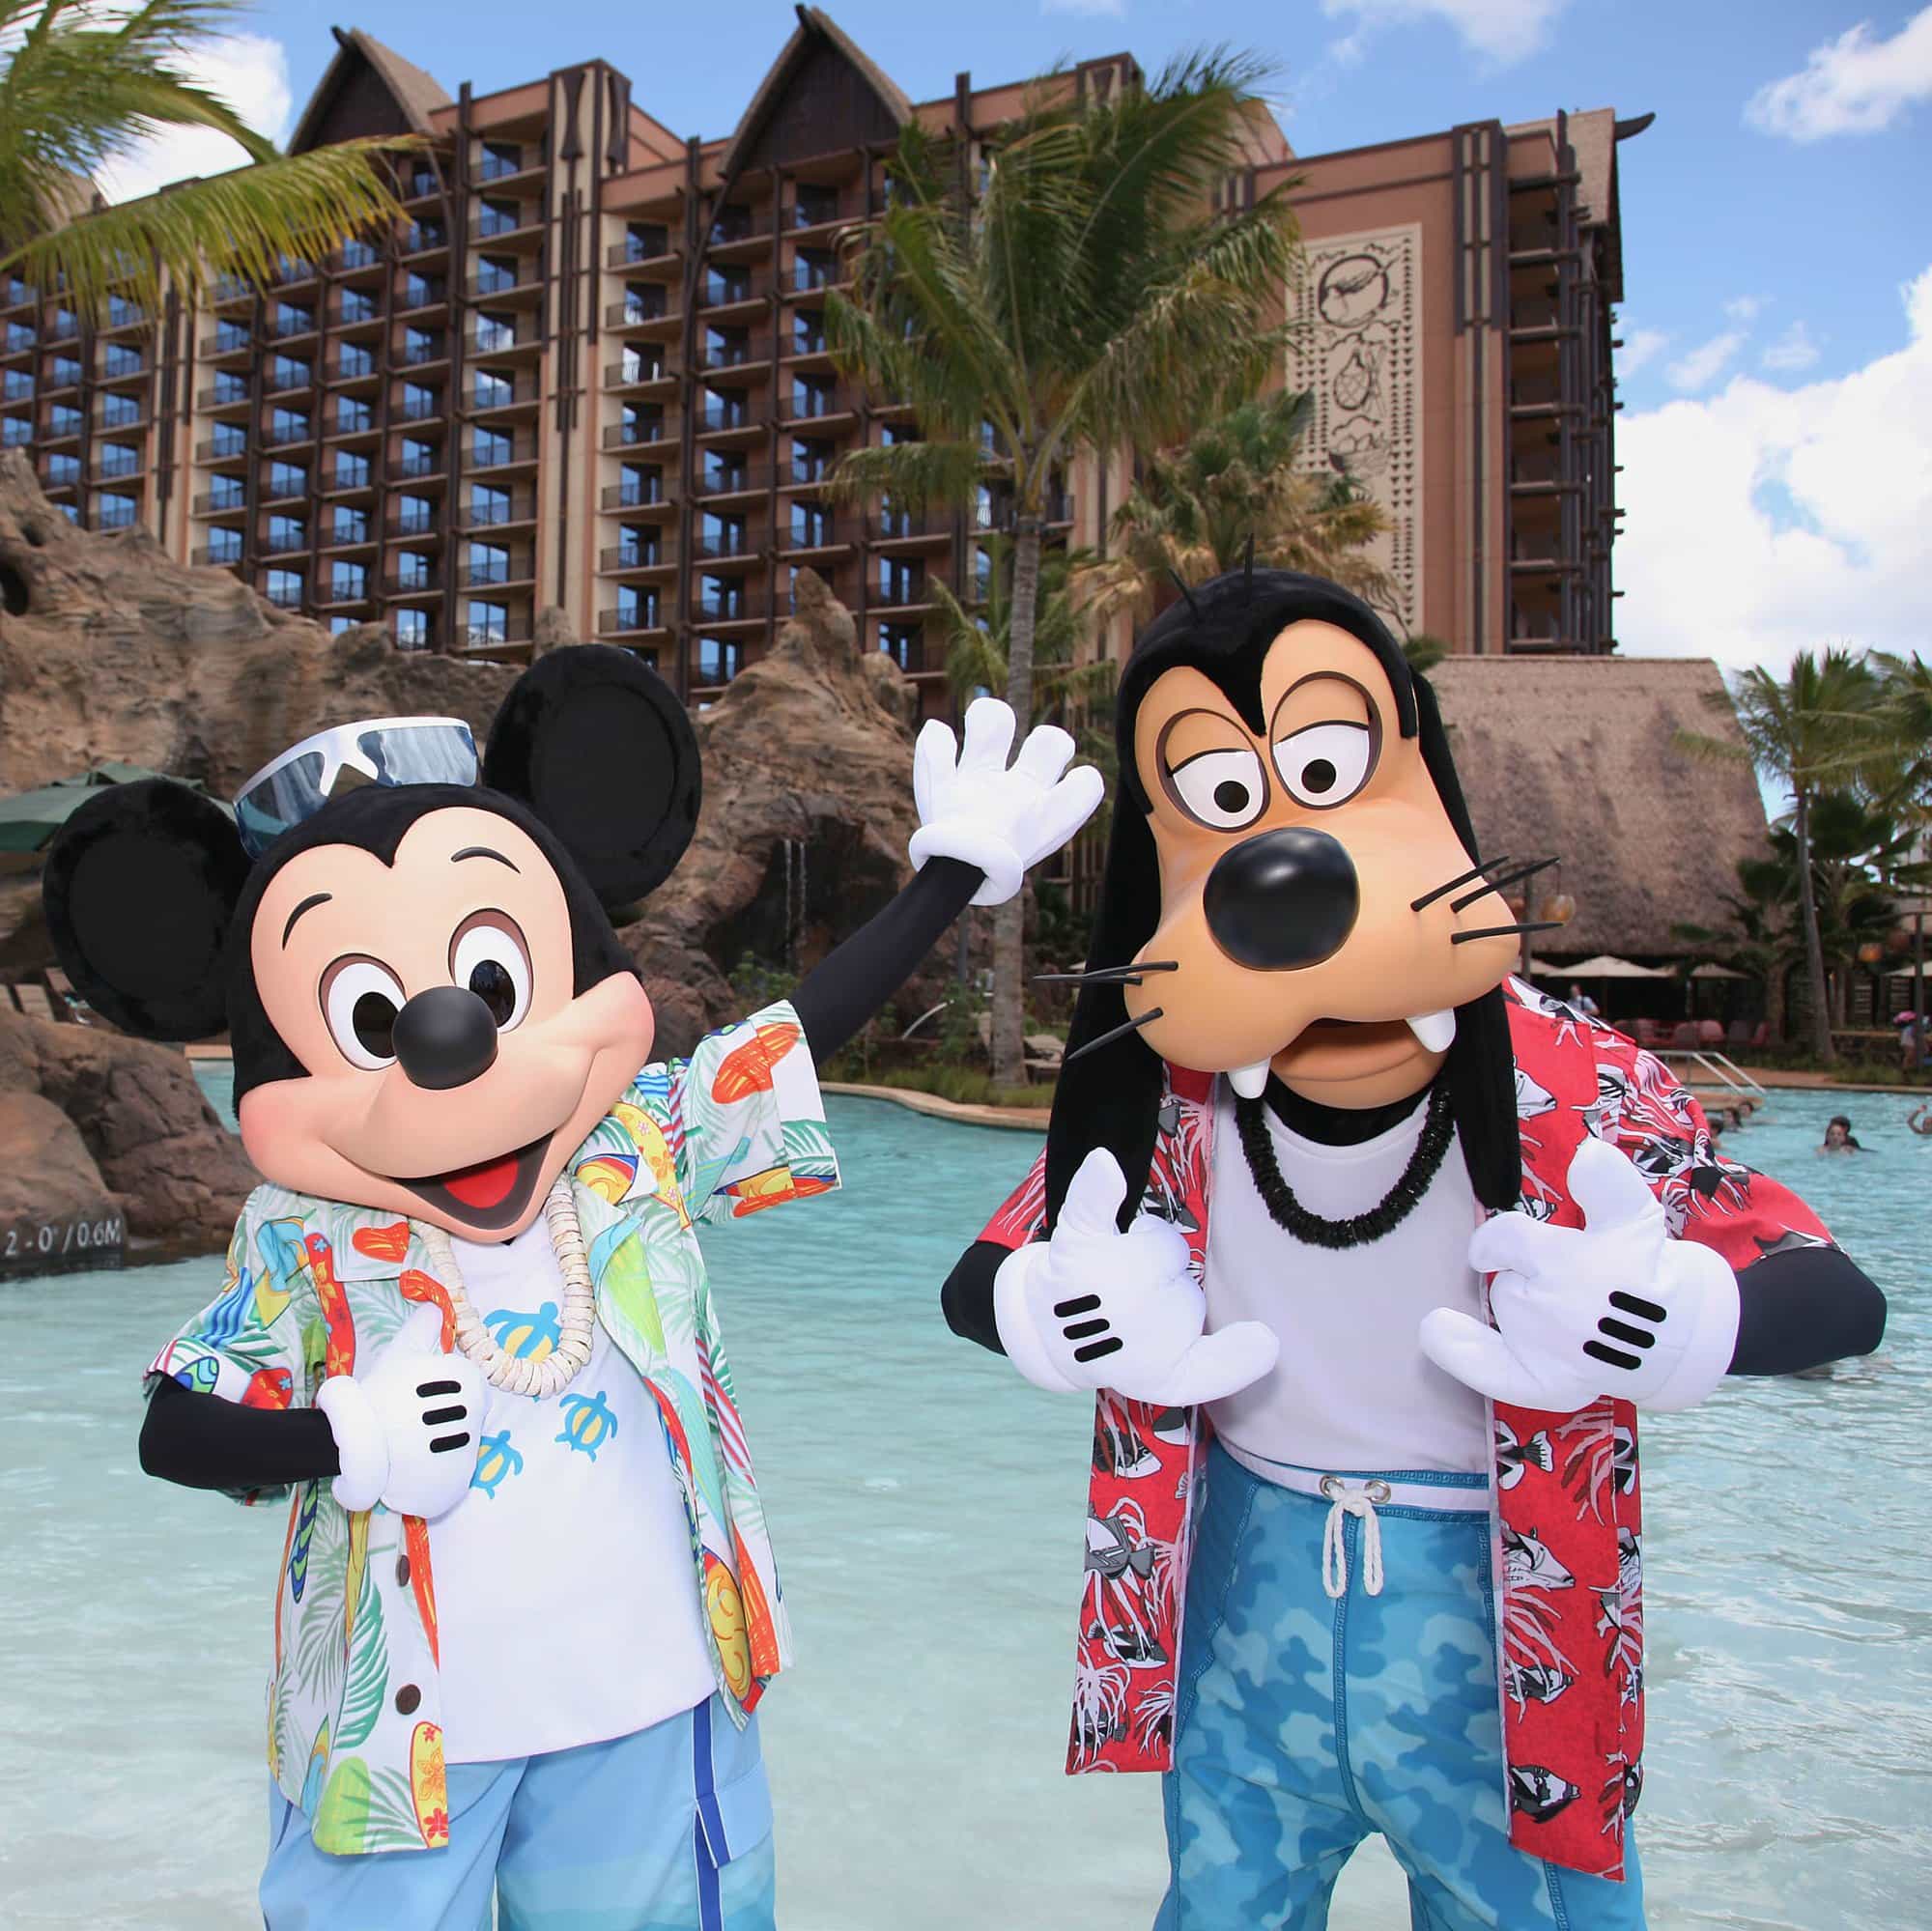 Pools and Water Activities at Disney Aulani in Hawaii